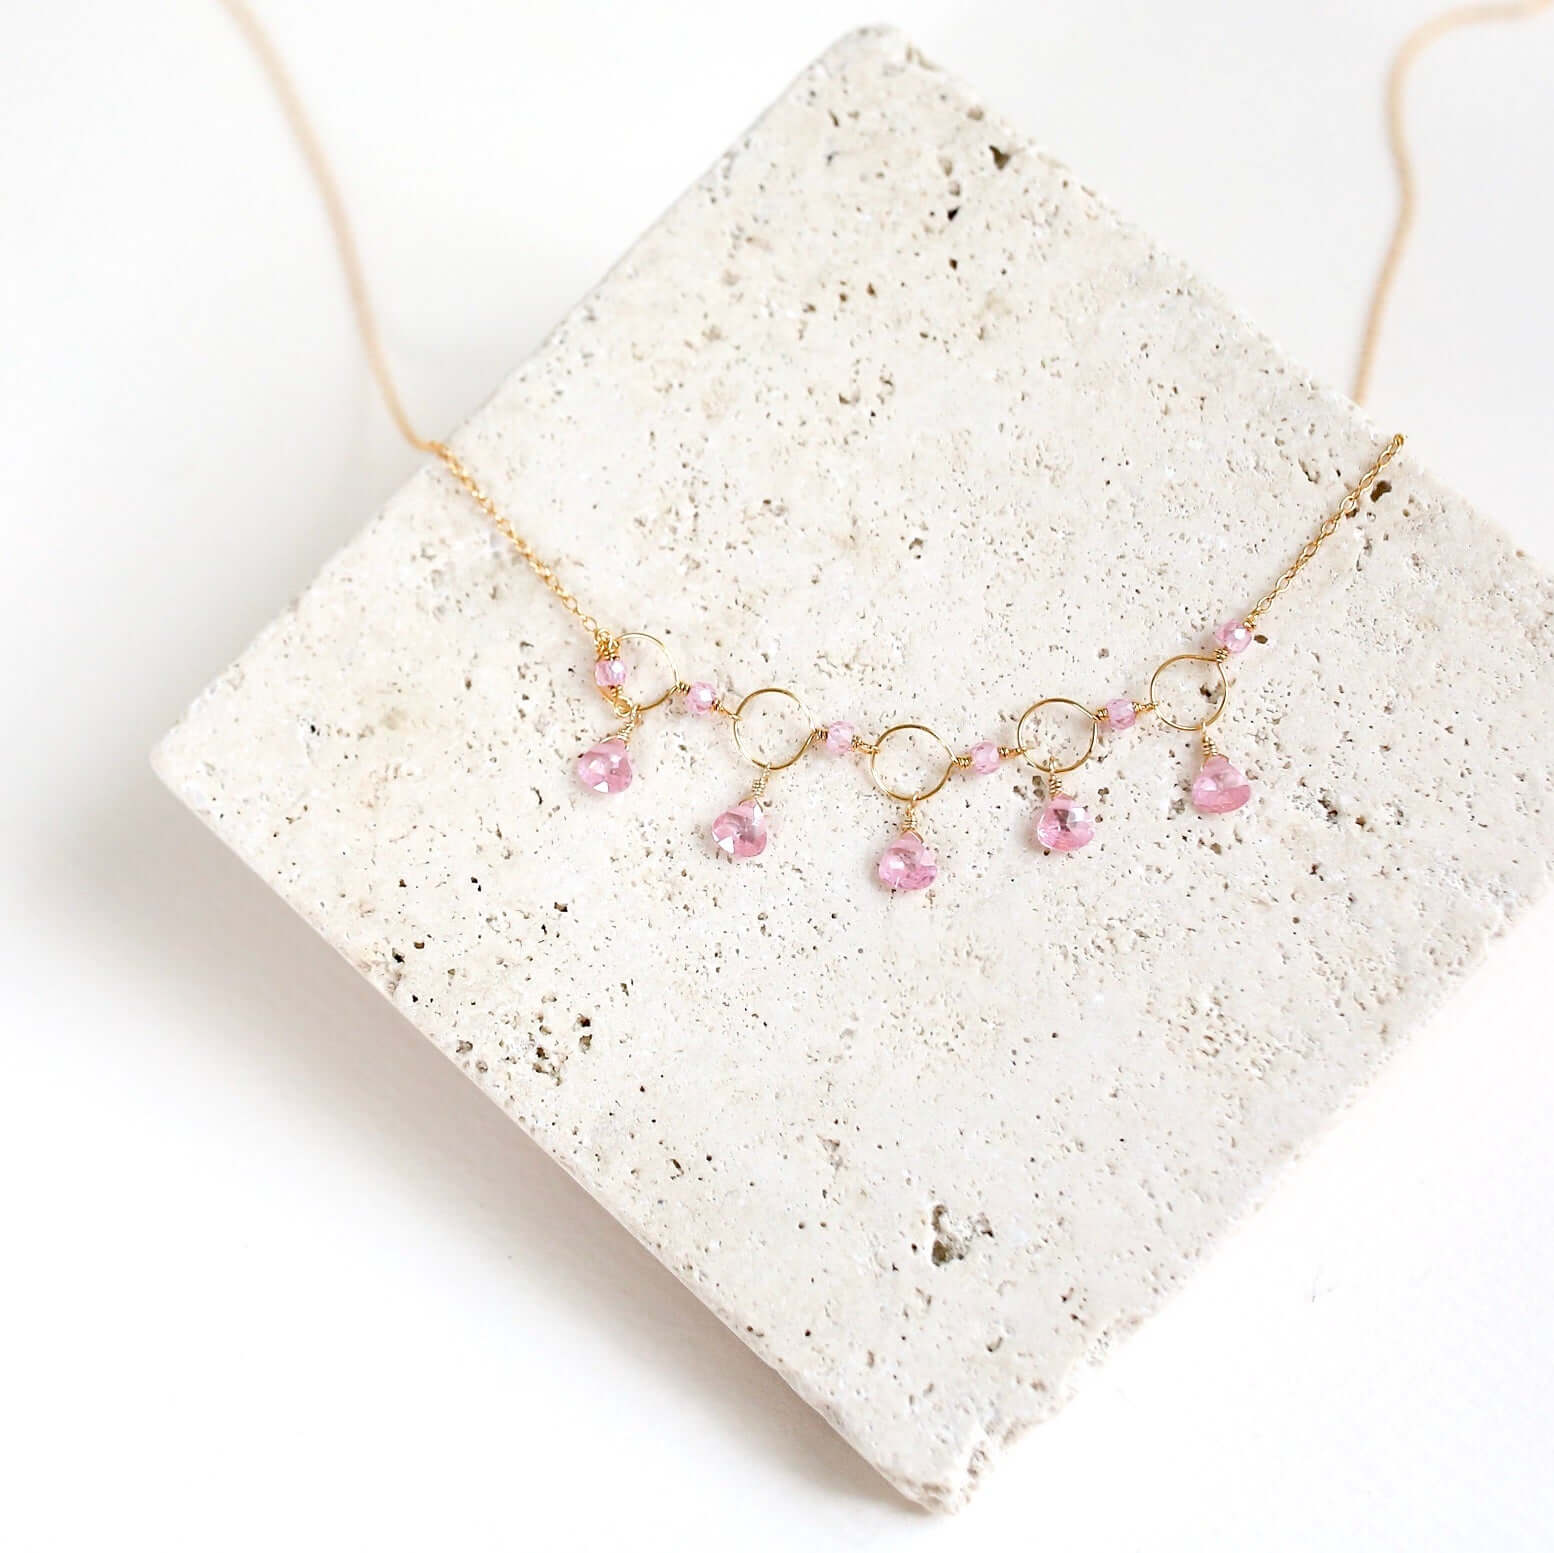 Adjustable Rose Quartz Gemstone Gold  Chain Necklace